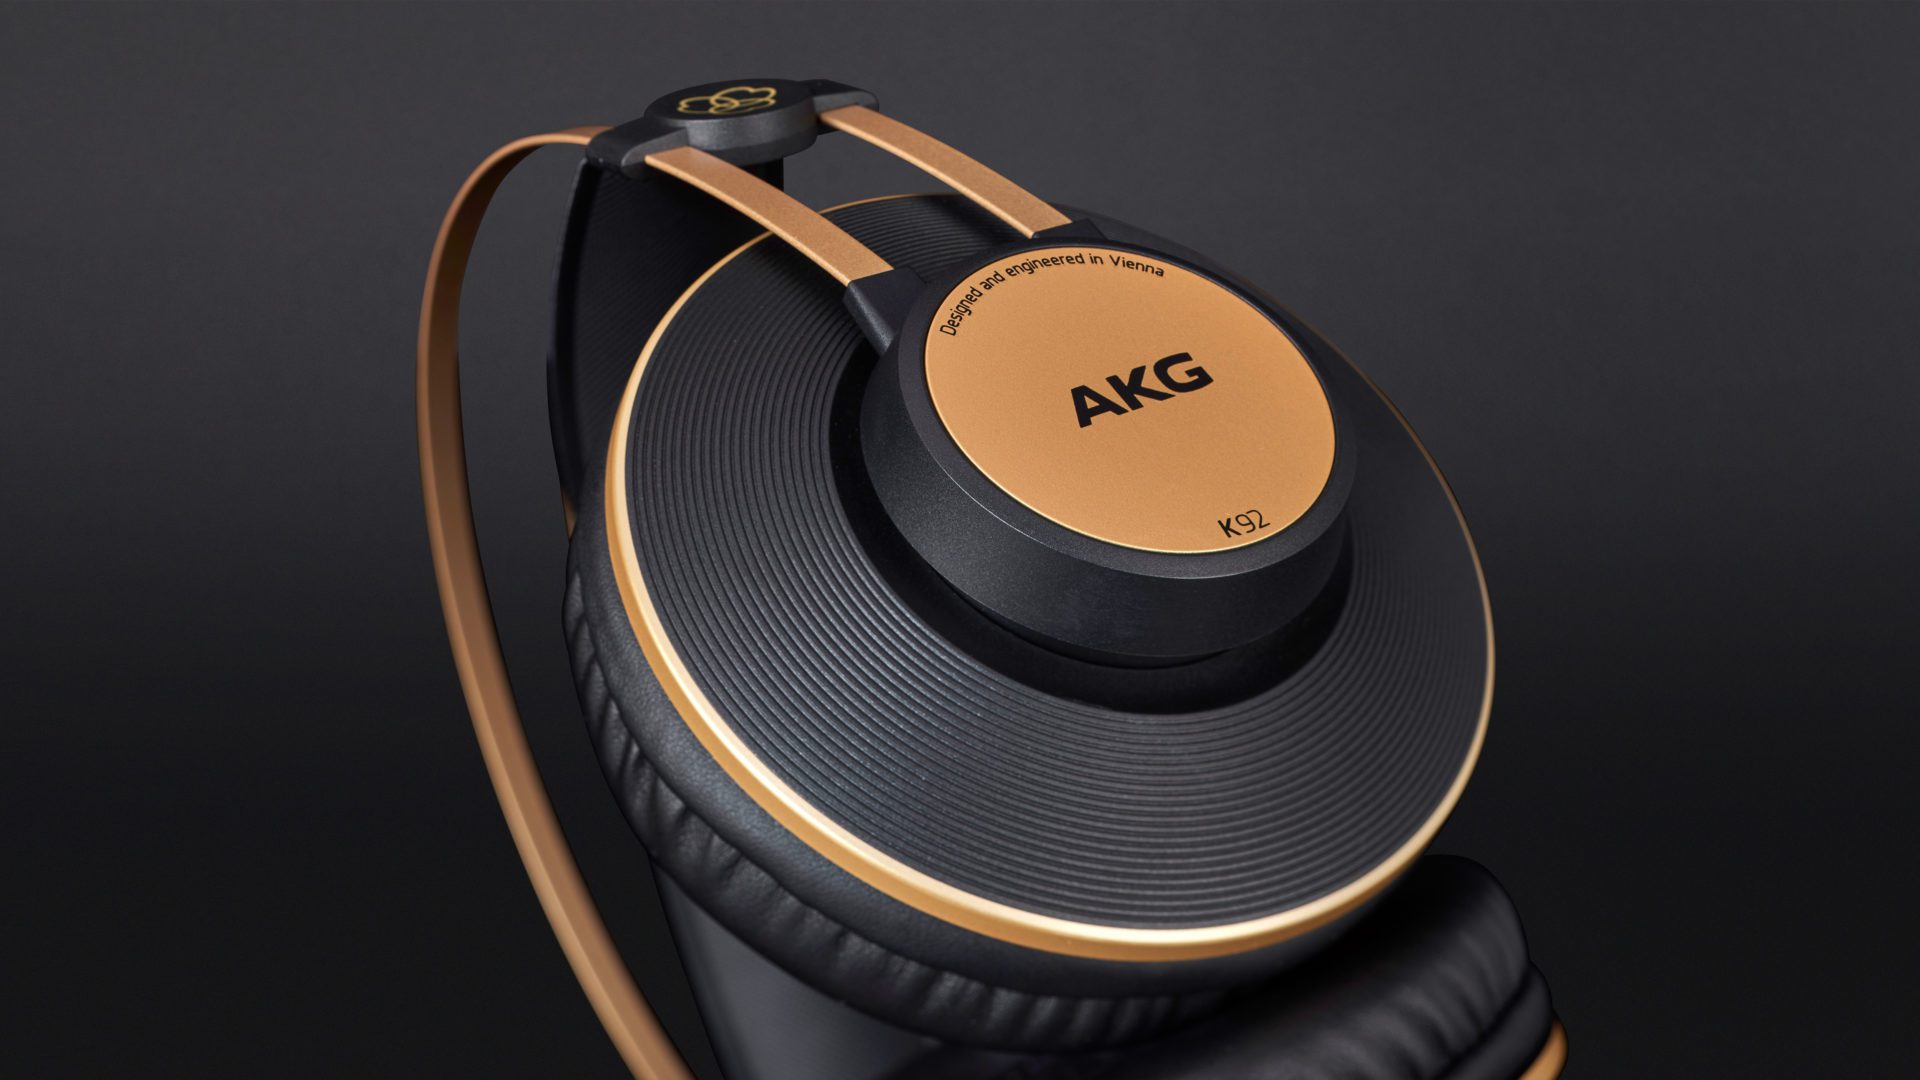 AKG K92 Studio/Production.Podcast Monitor Headphones+DAC Headphone Amp